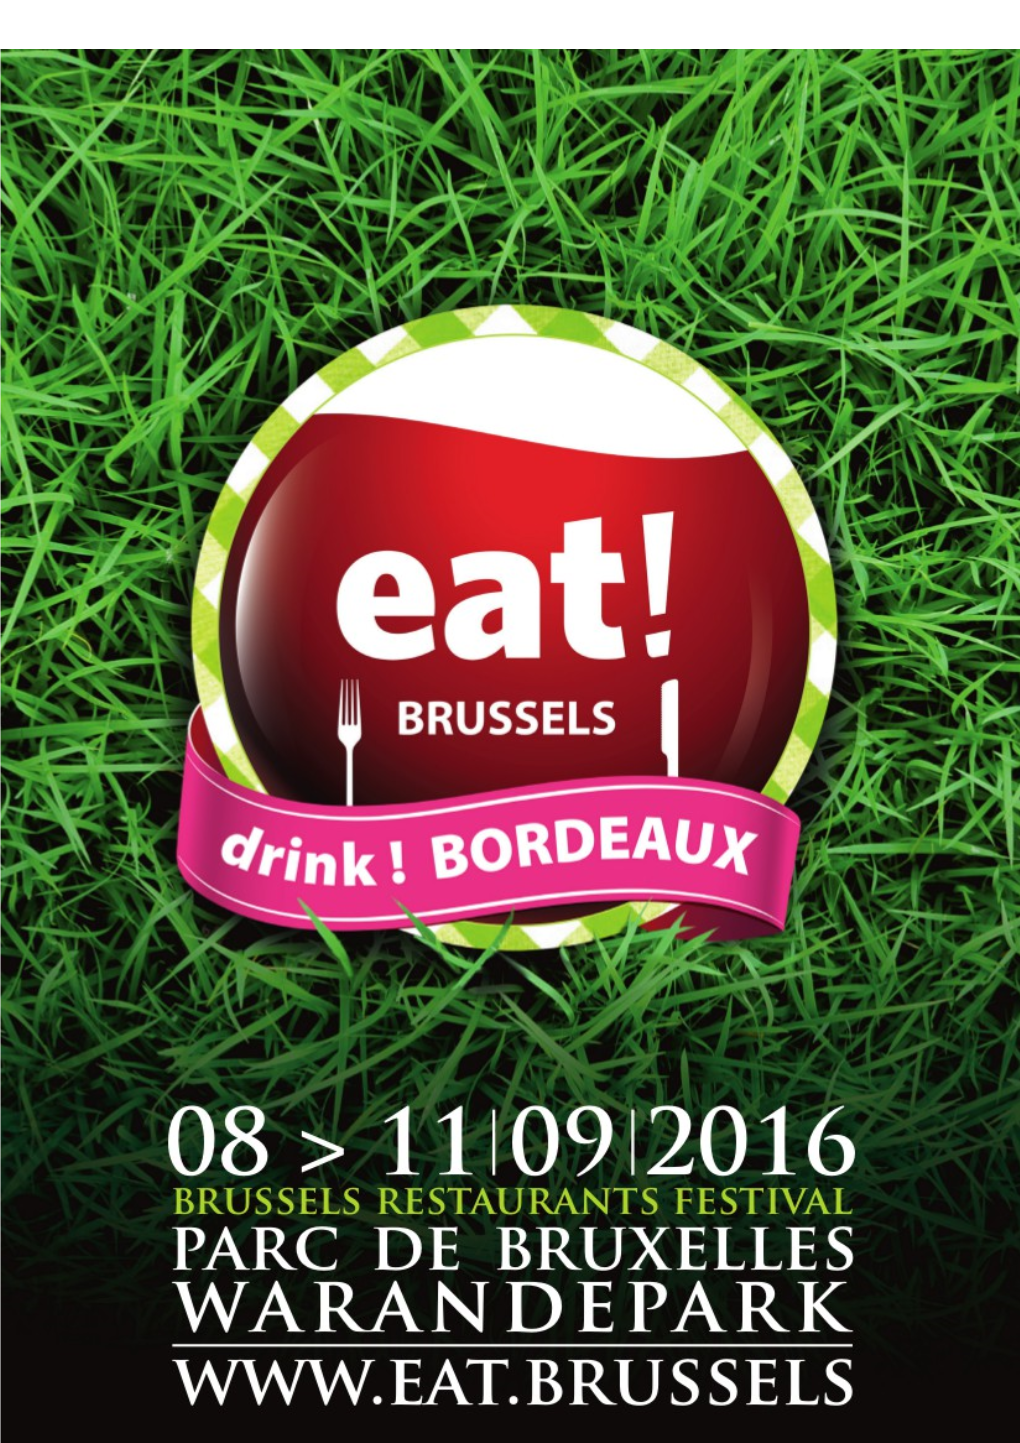 Eat! BRUSSELS, Drink! BORDEAUX 2016